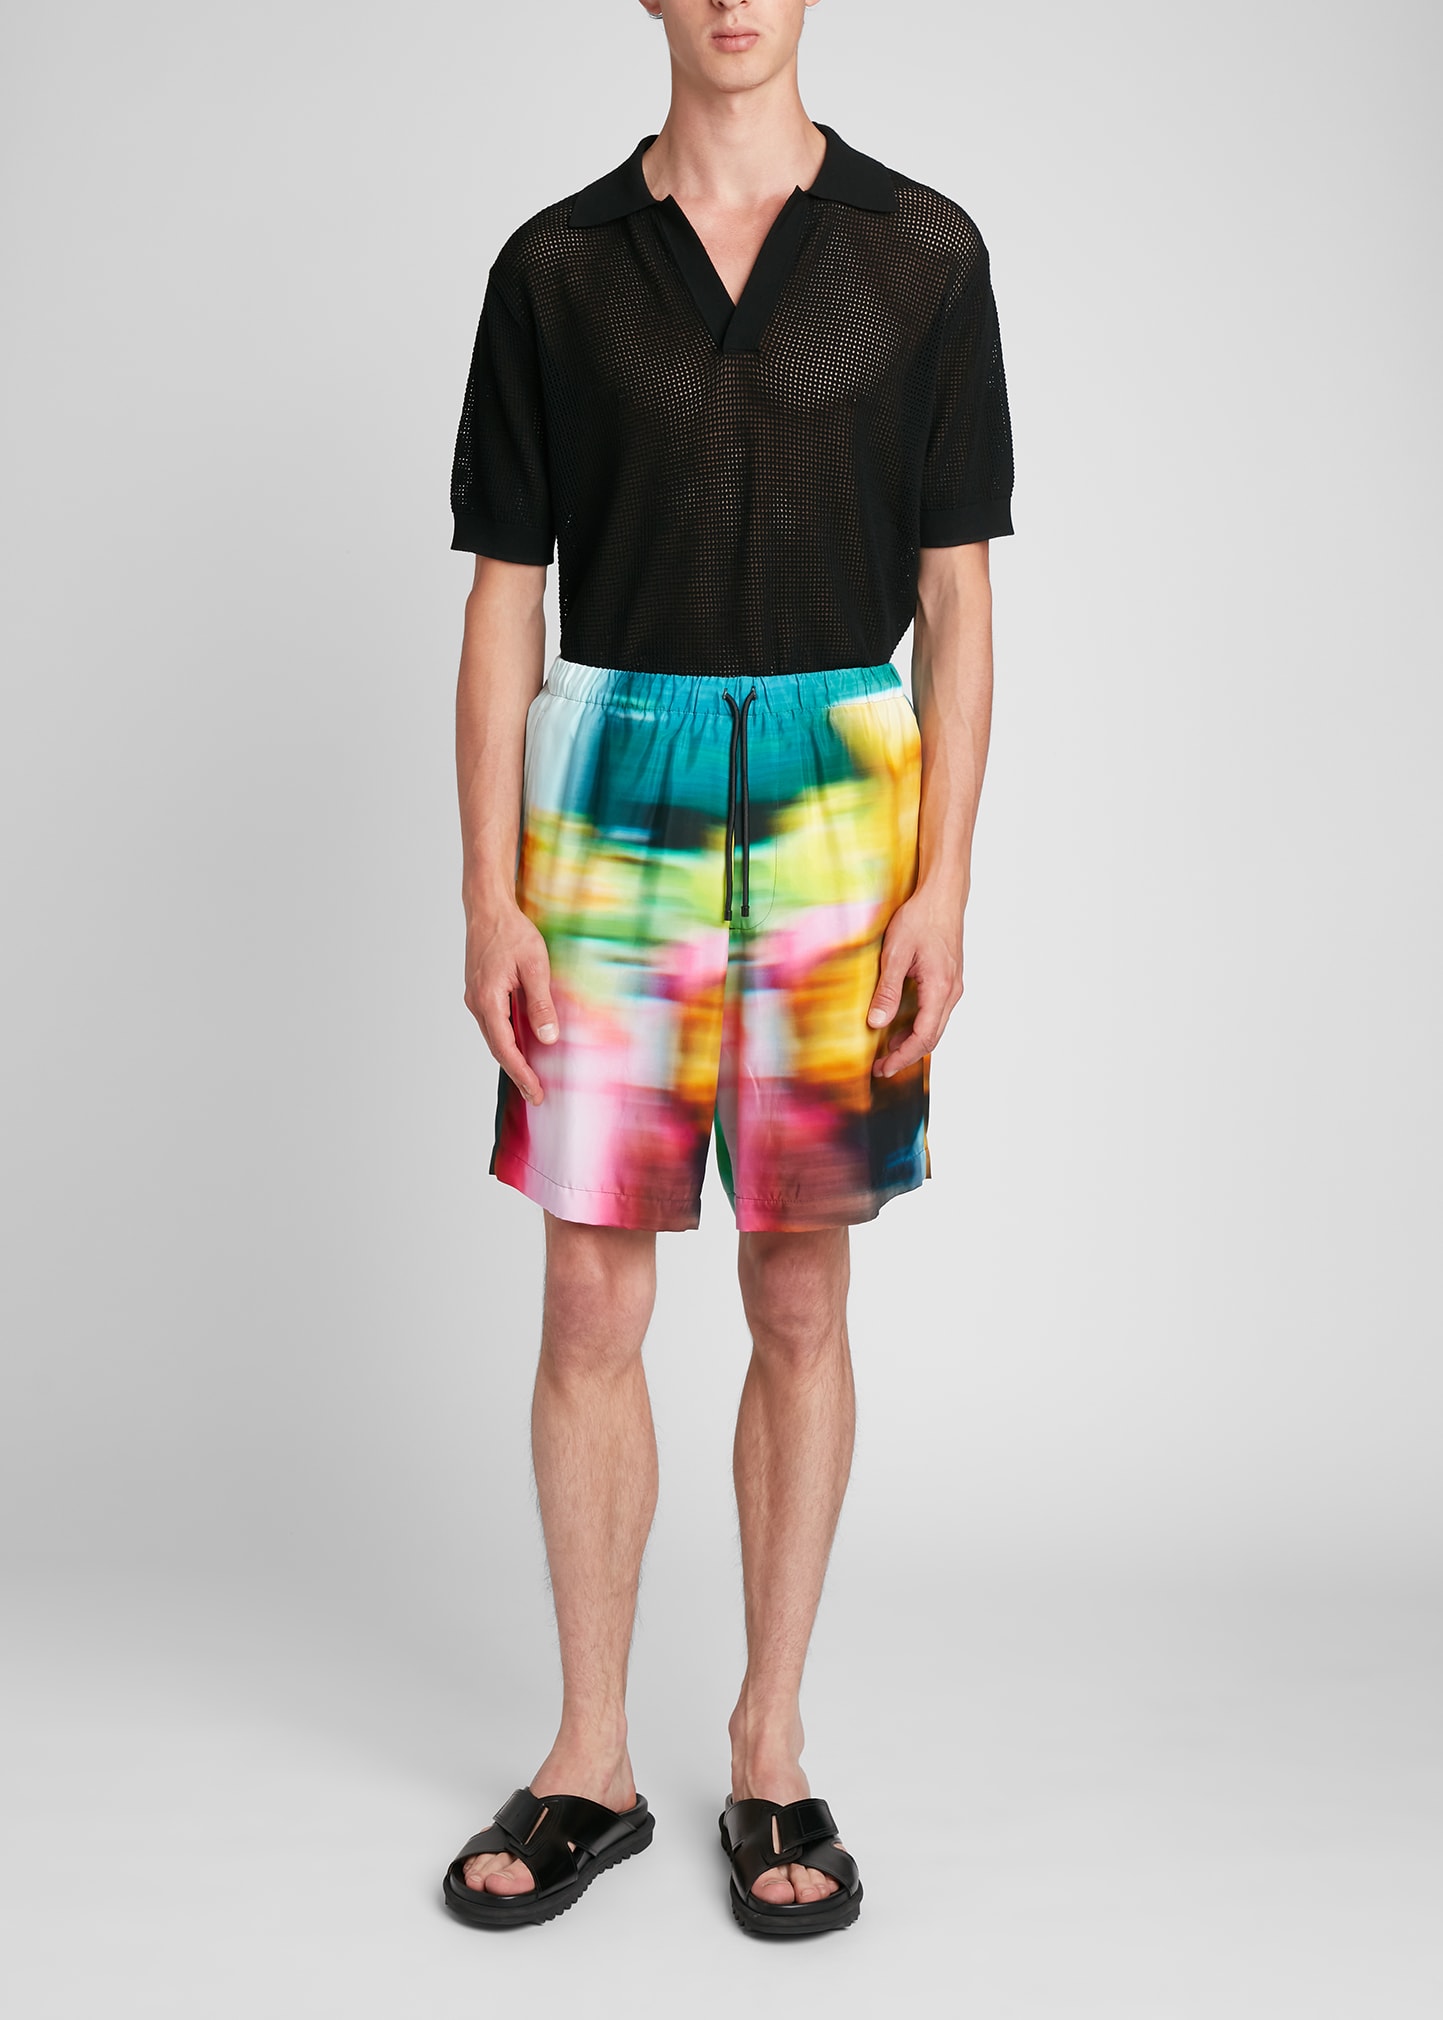 Men's Neon Abstract-Print Shorts